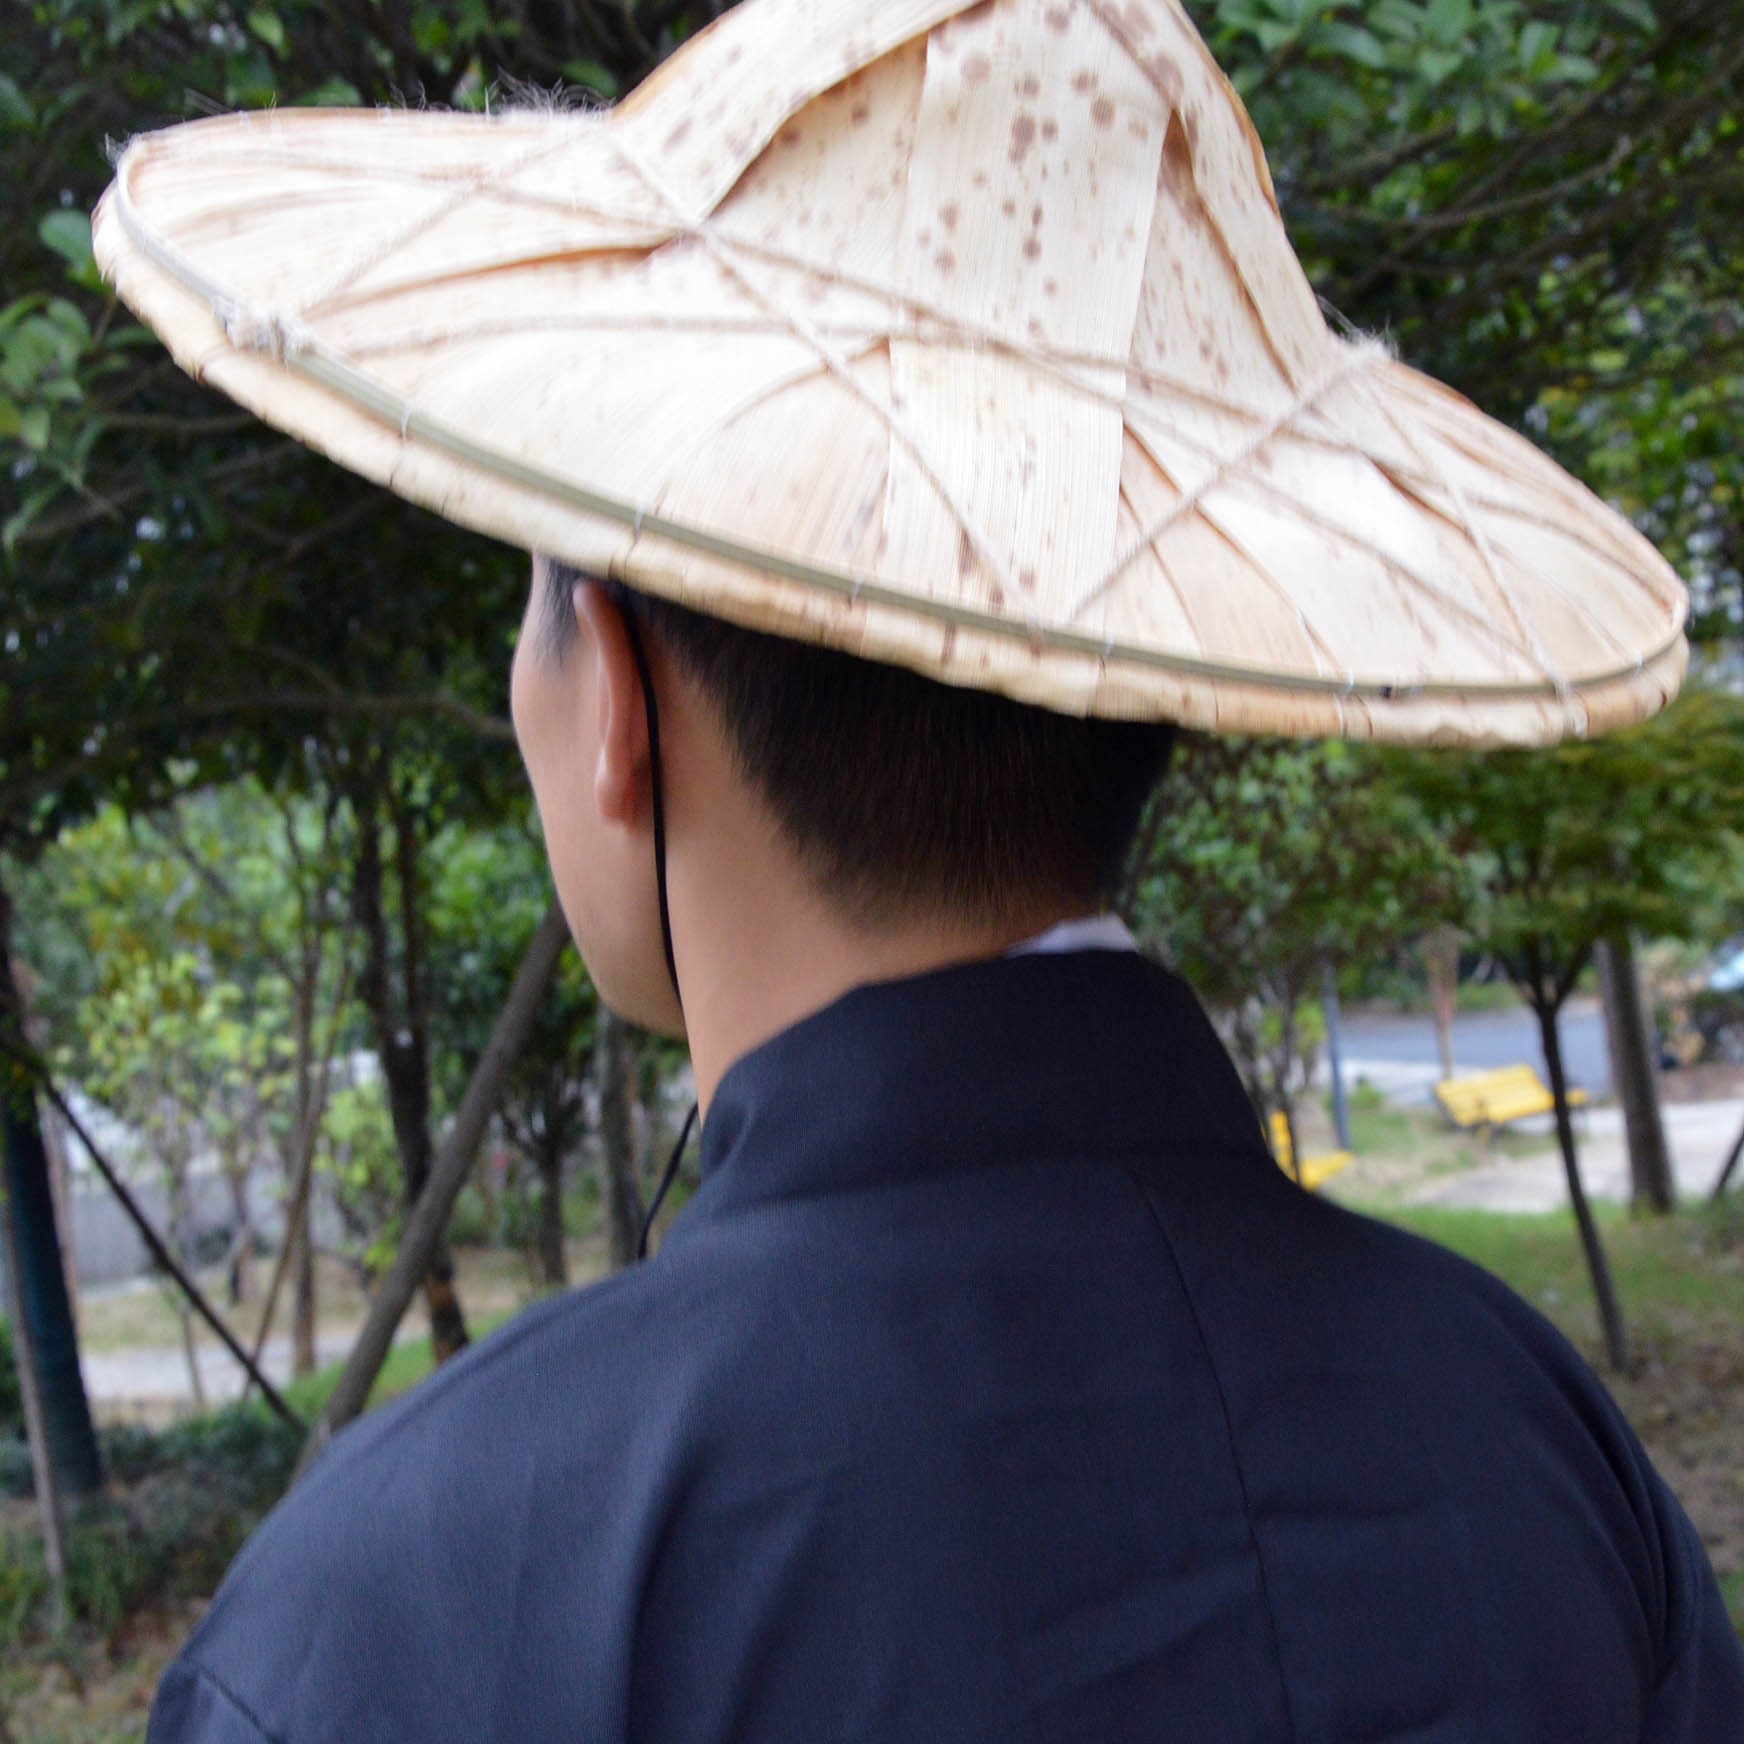 Mid 20th-Century Chinese Split Bamboo & Plaited Leaf Dǒulì (斗笠) Aka Conical  Hats - a Pair